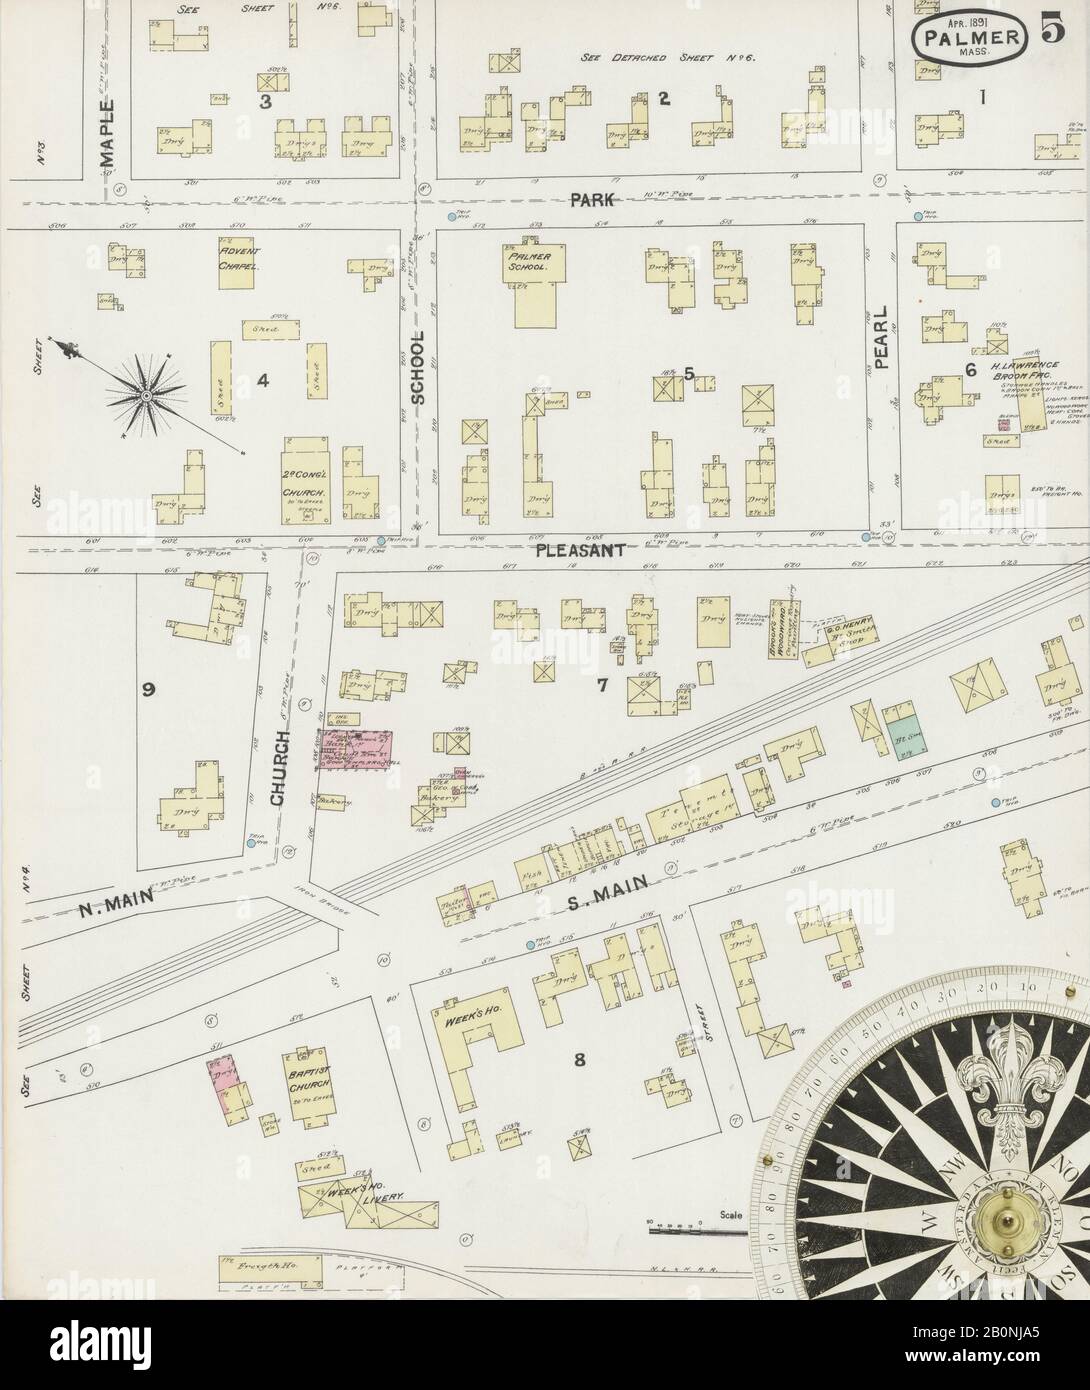 Bild 5 von Sanborn Fire Insurance Map aus Palmer, Hampden County, Massachusetts. Apr. 6 Blatt(e), Amerika, Straßenkarte mit einem Kompass Aus Dem 19. Jahrhundert Stockfoto